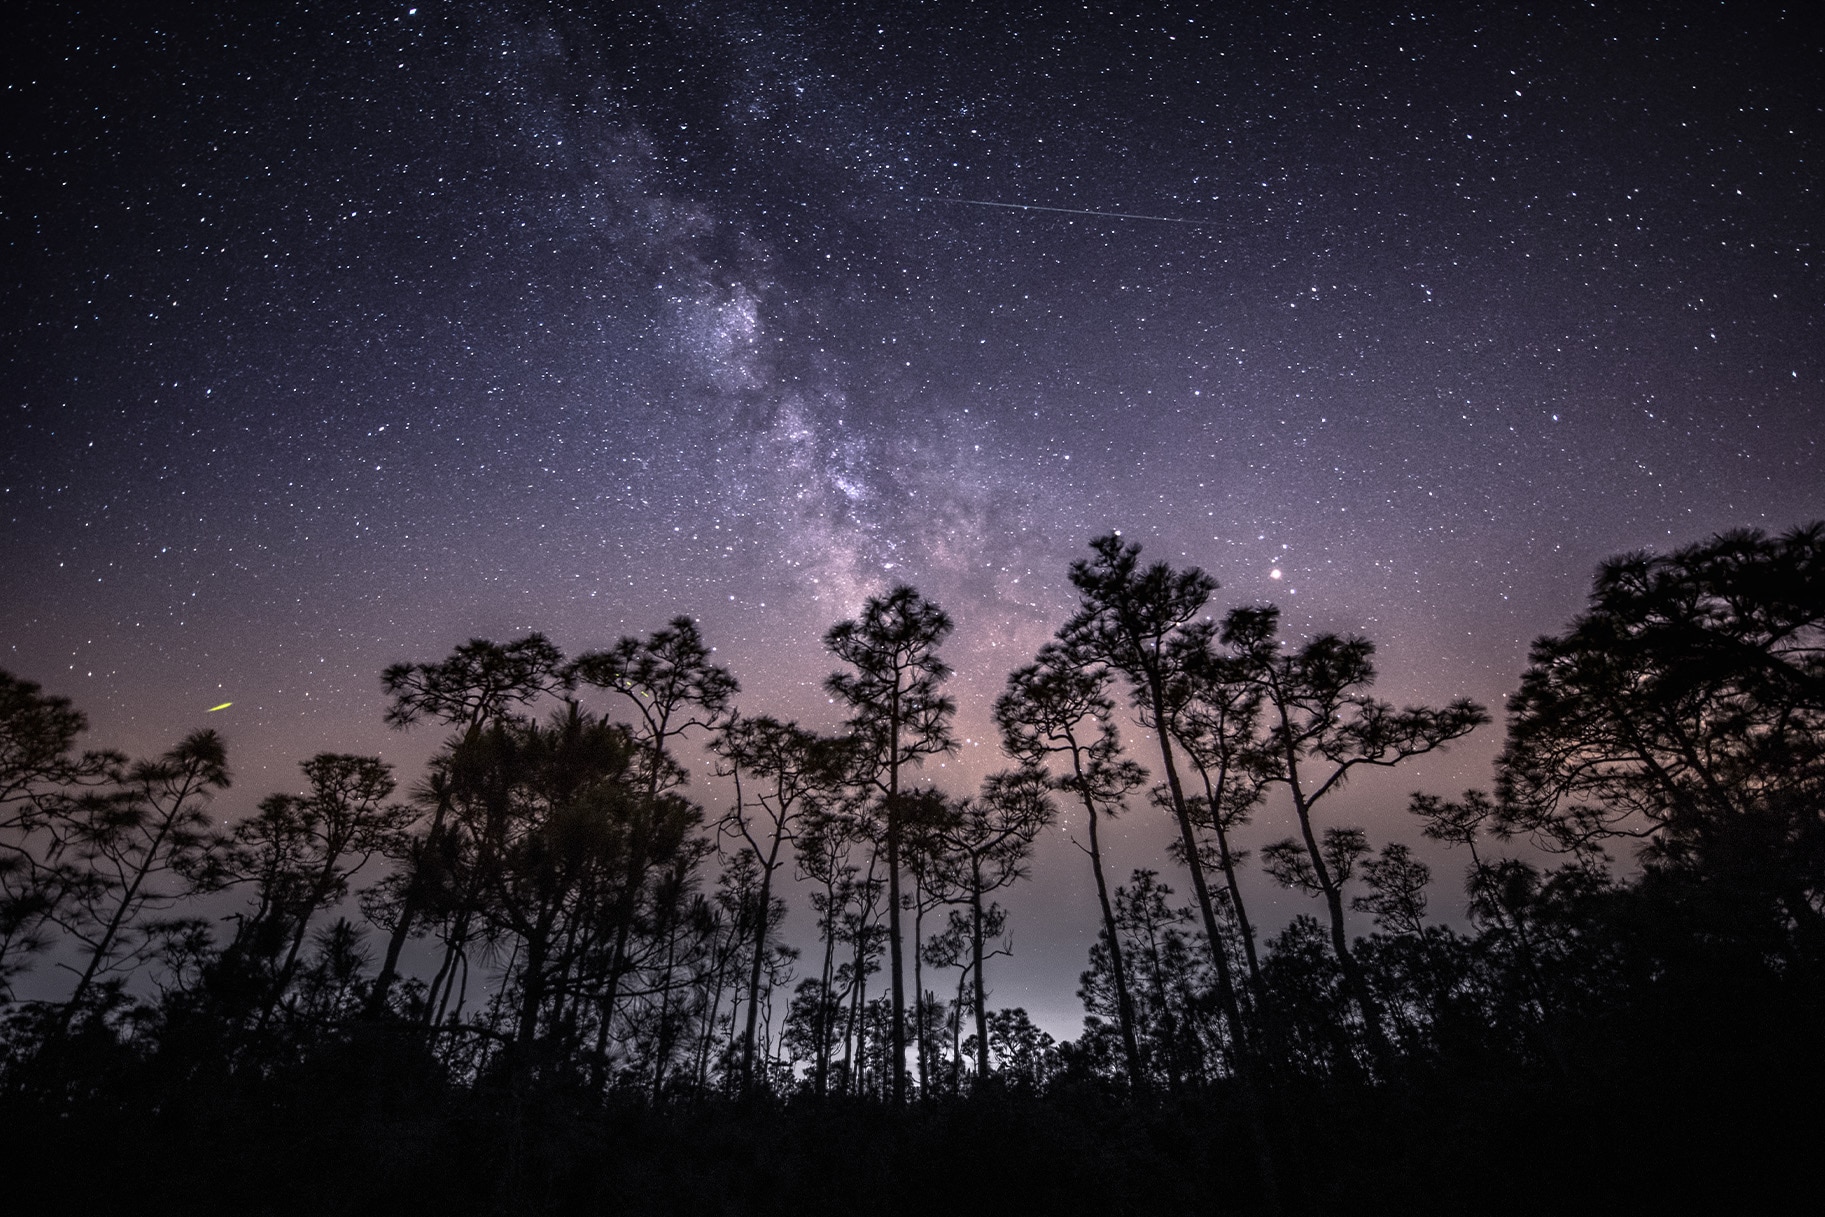 A view of the Eta Aquarids meteor see through trees.